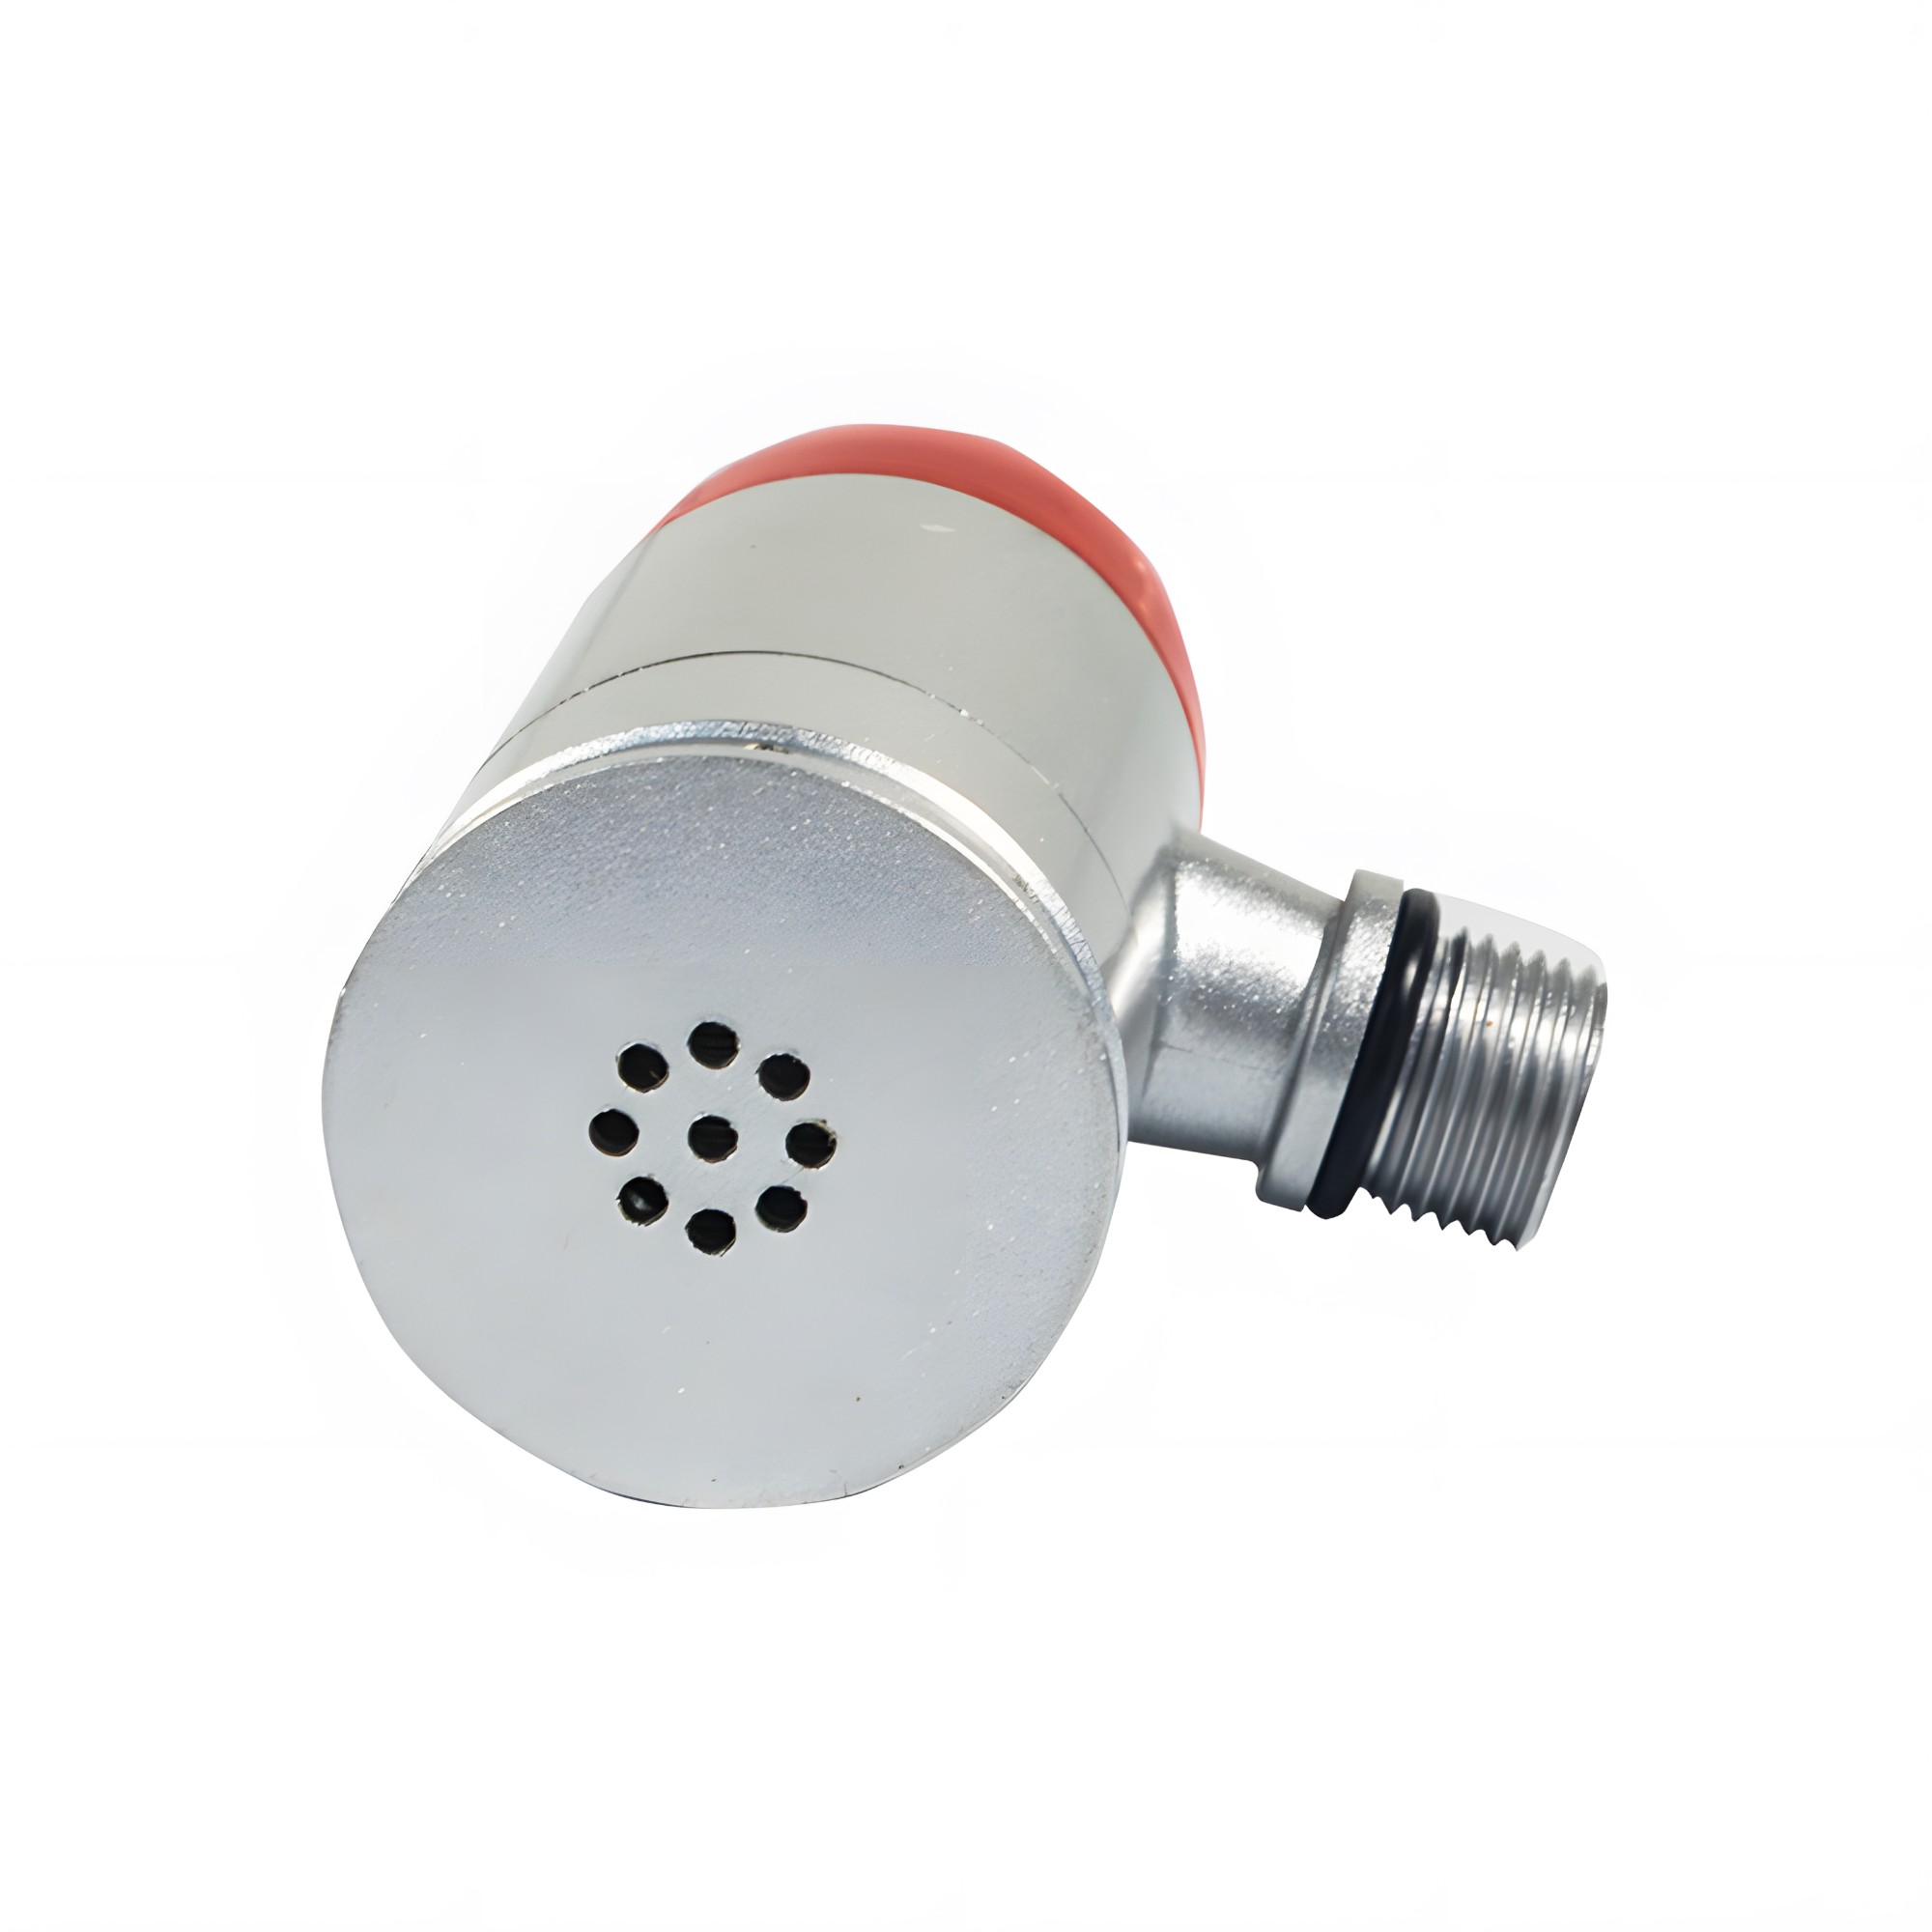 QD100  sound and light alarm lamp